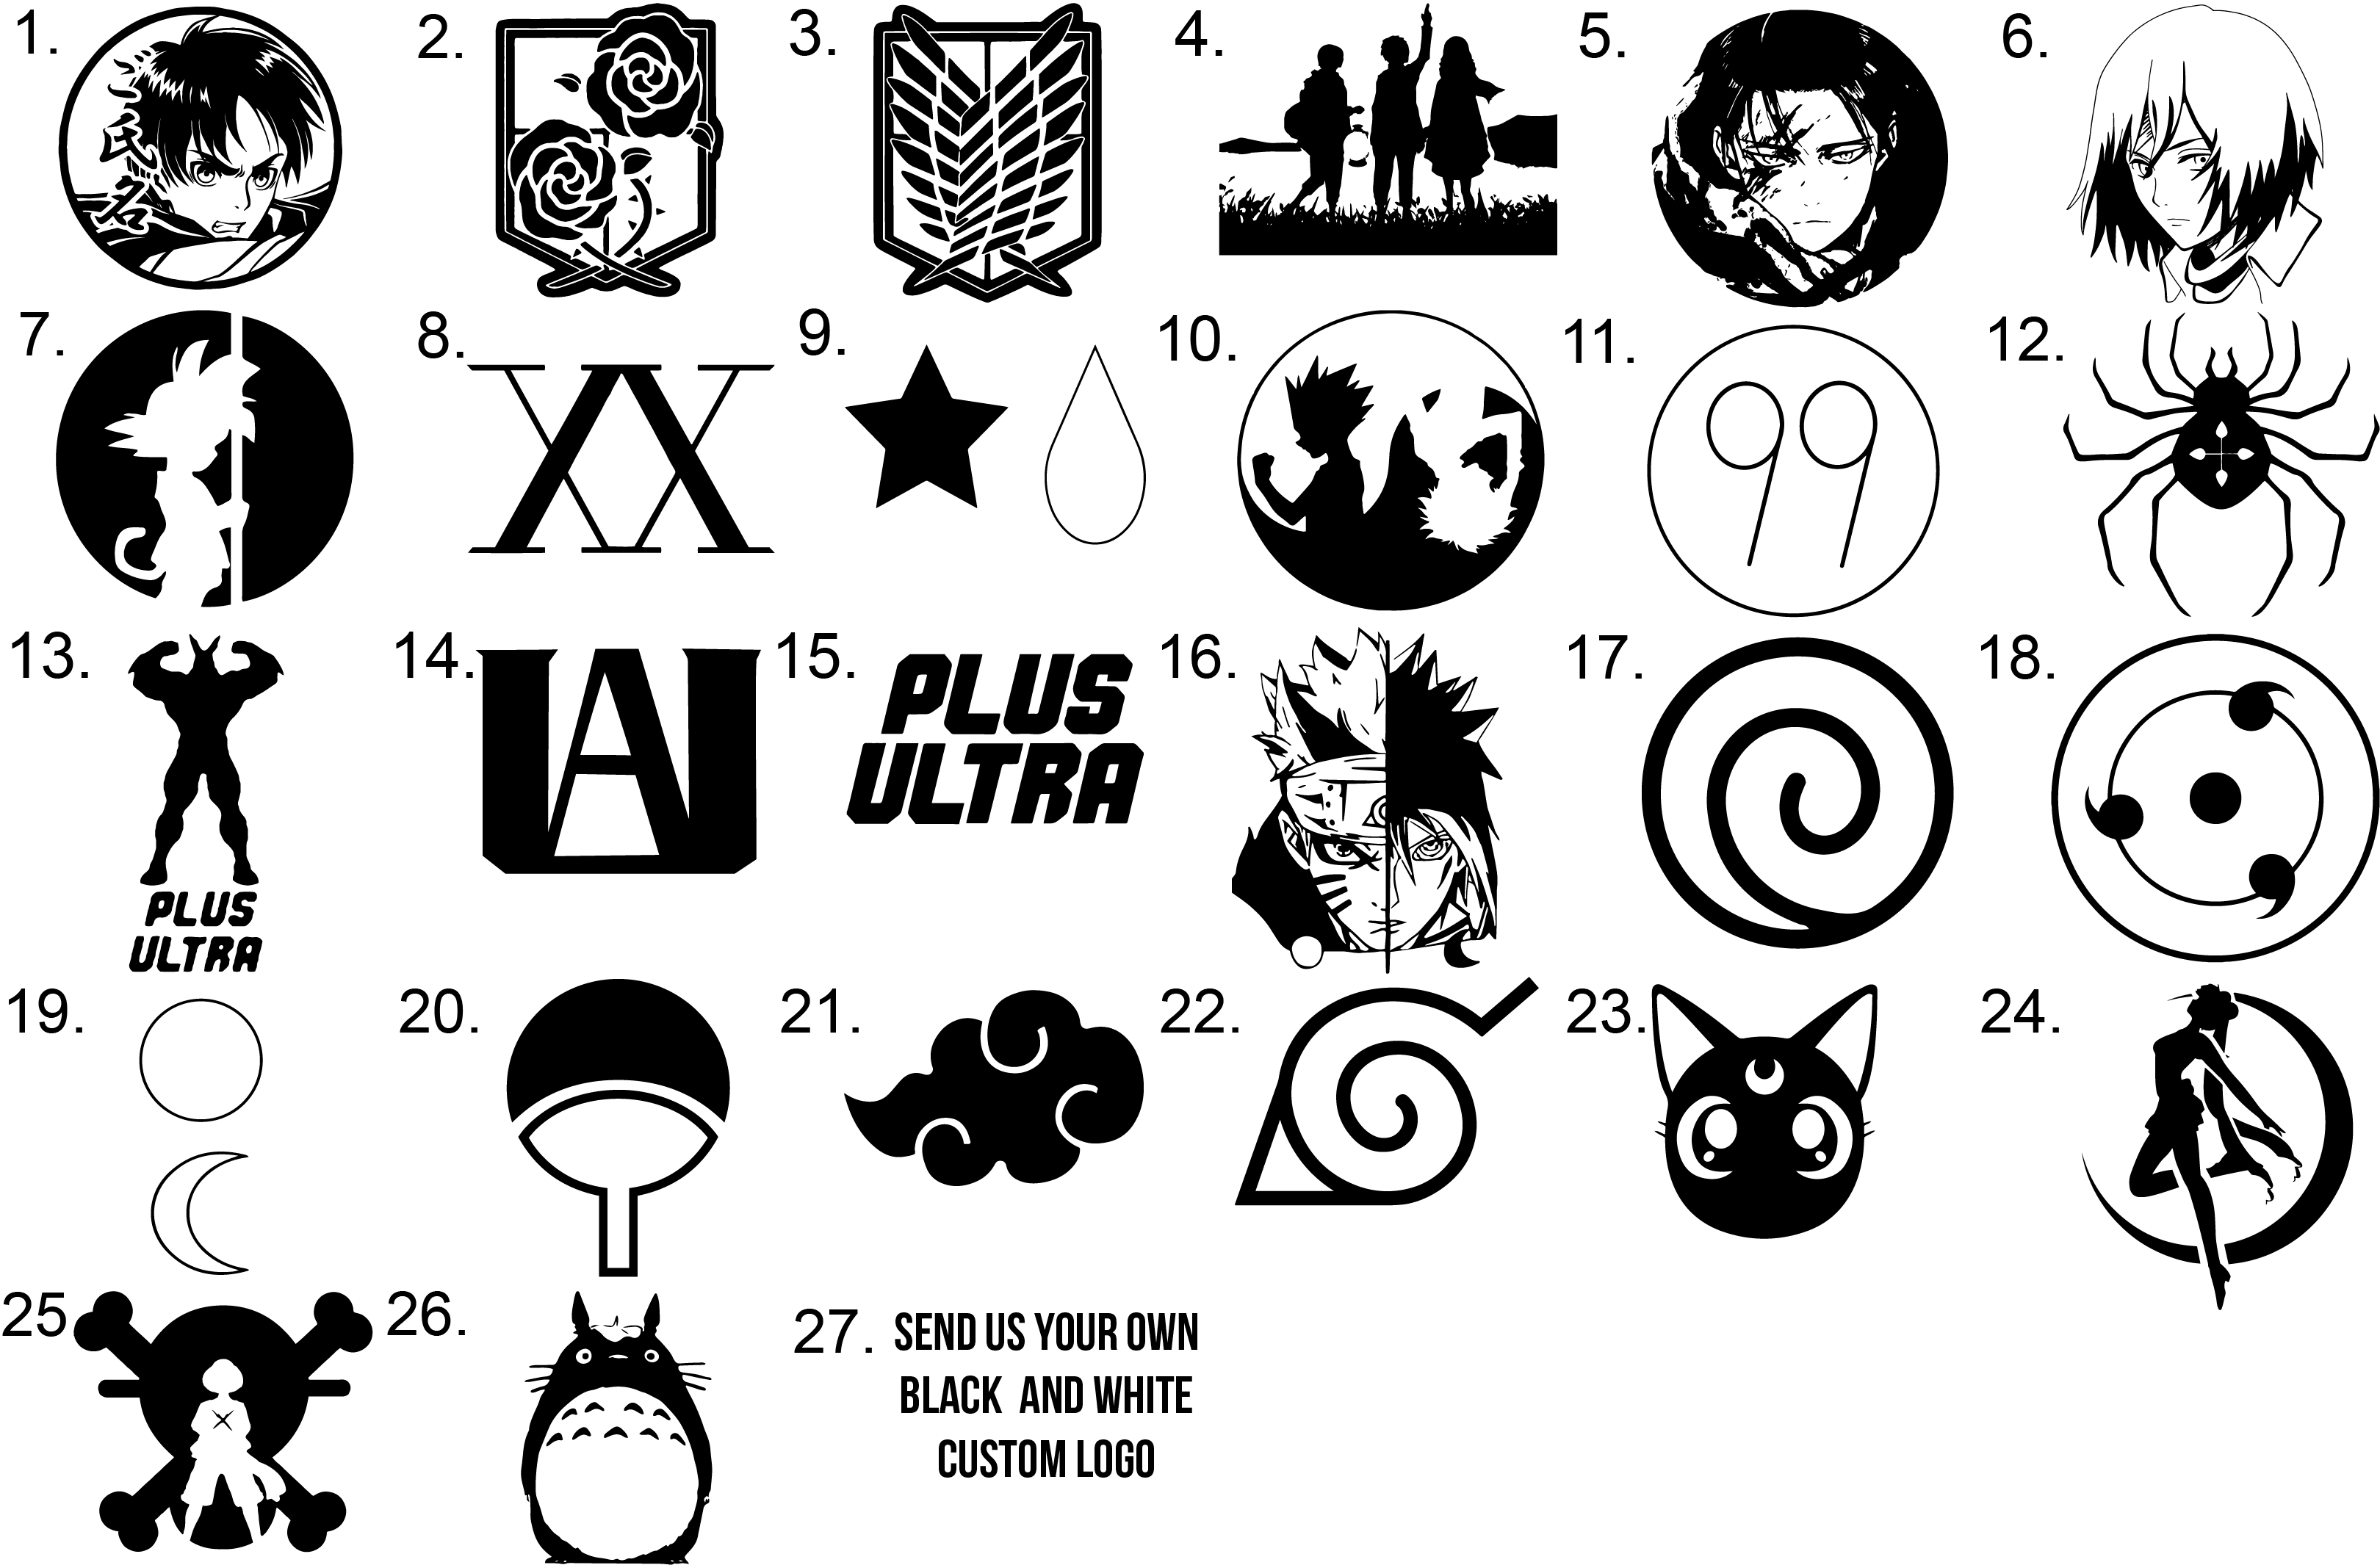 100+] Anime Symbols Wallpapers | Wallpapers.com